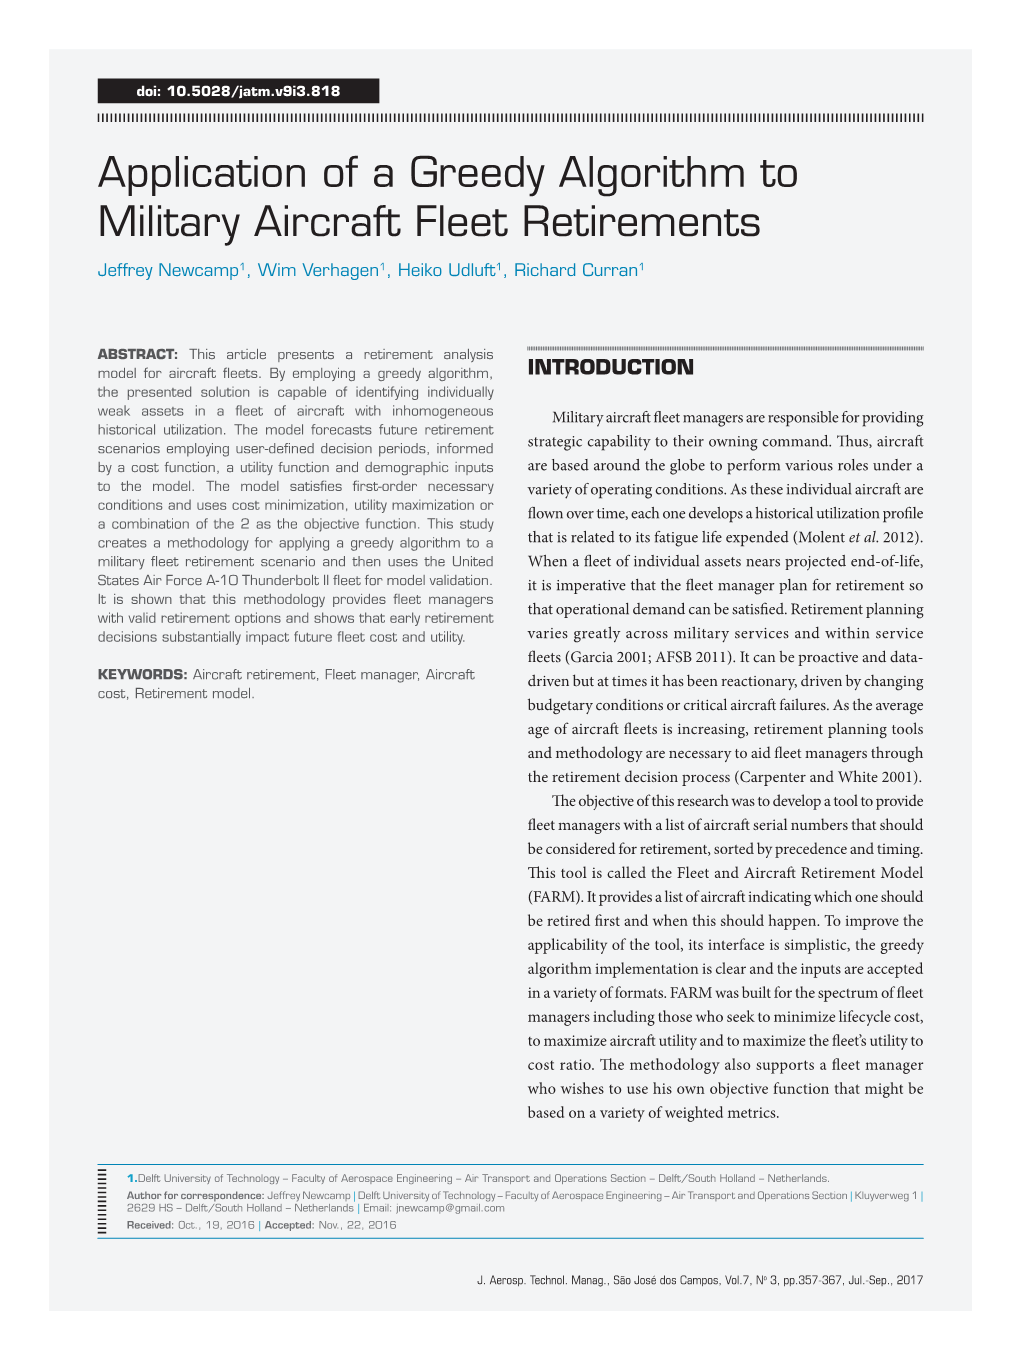 Application of a Greedy Algorithm to Military Aircraft Fleet Retirements Jeffrey Newcamp1, Wim Verhagen1, Heiko Udluft1, Richard Curran1